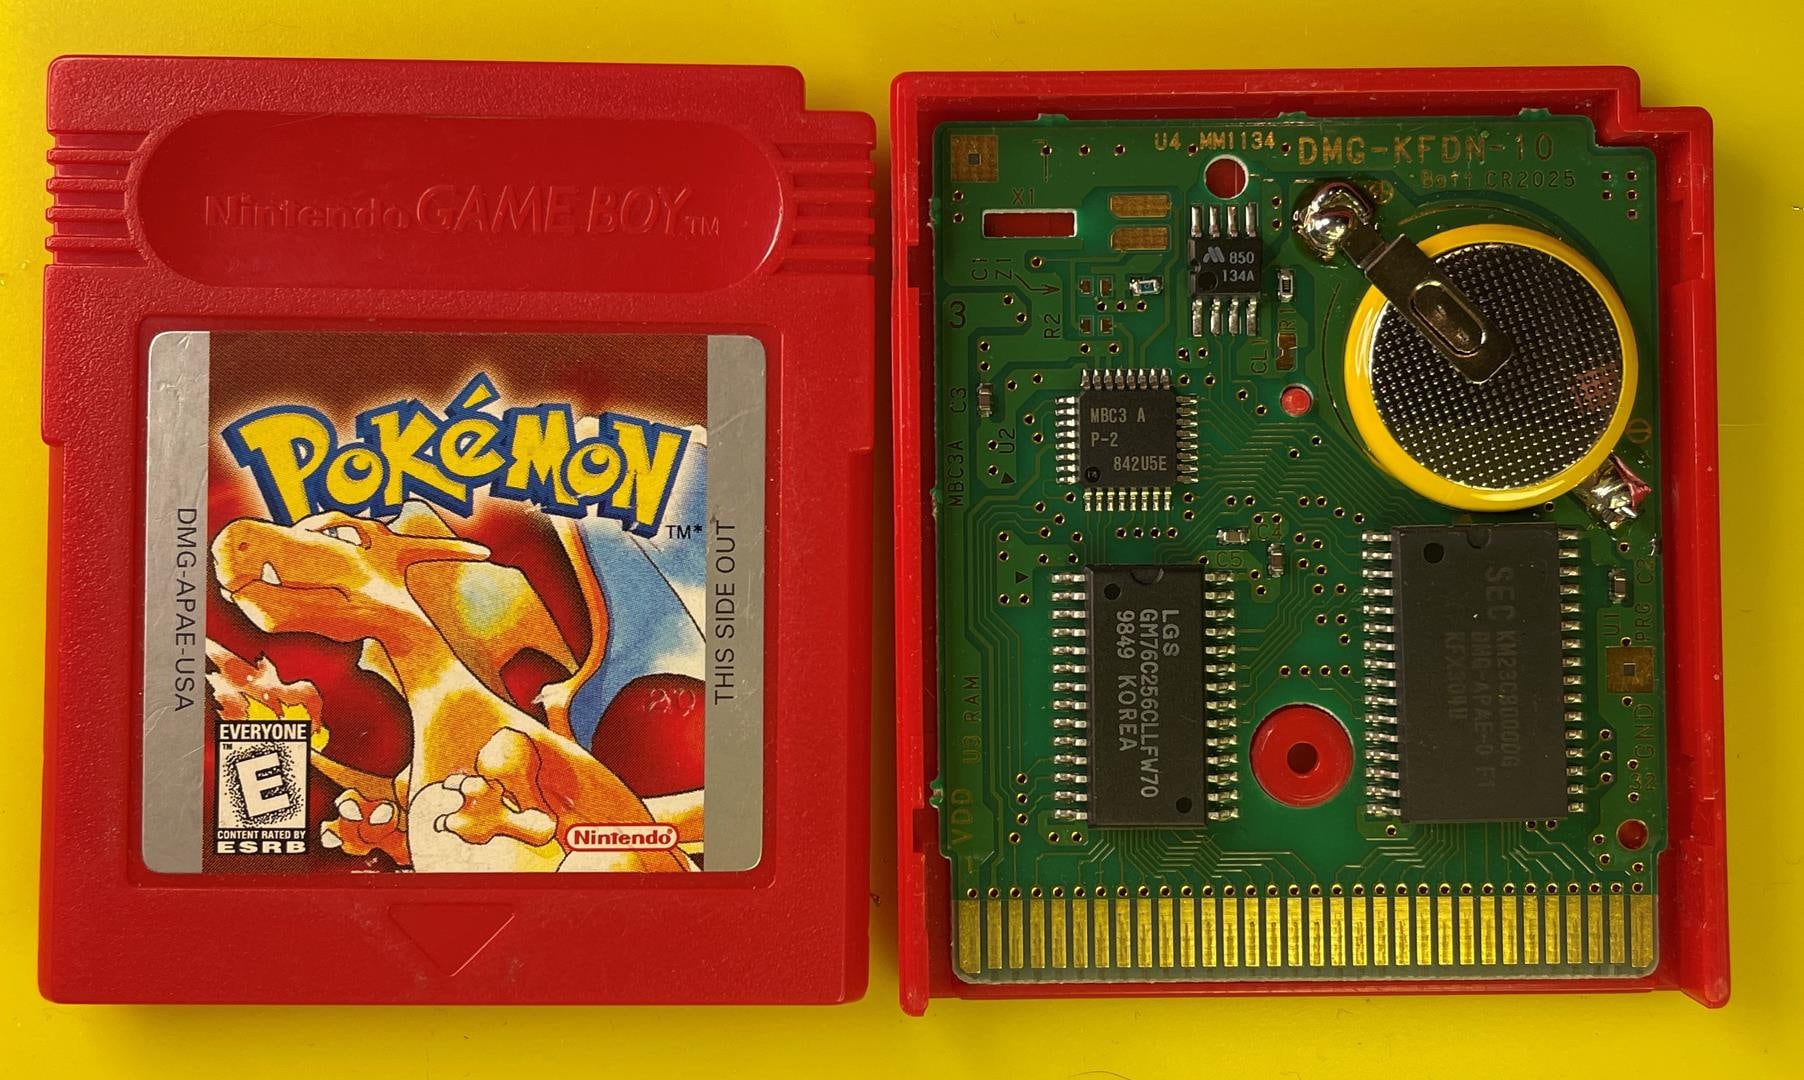  Pokemon Red Version - Working Save Battery (Renewed) : Video  Games